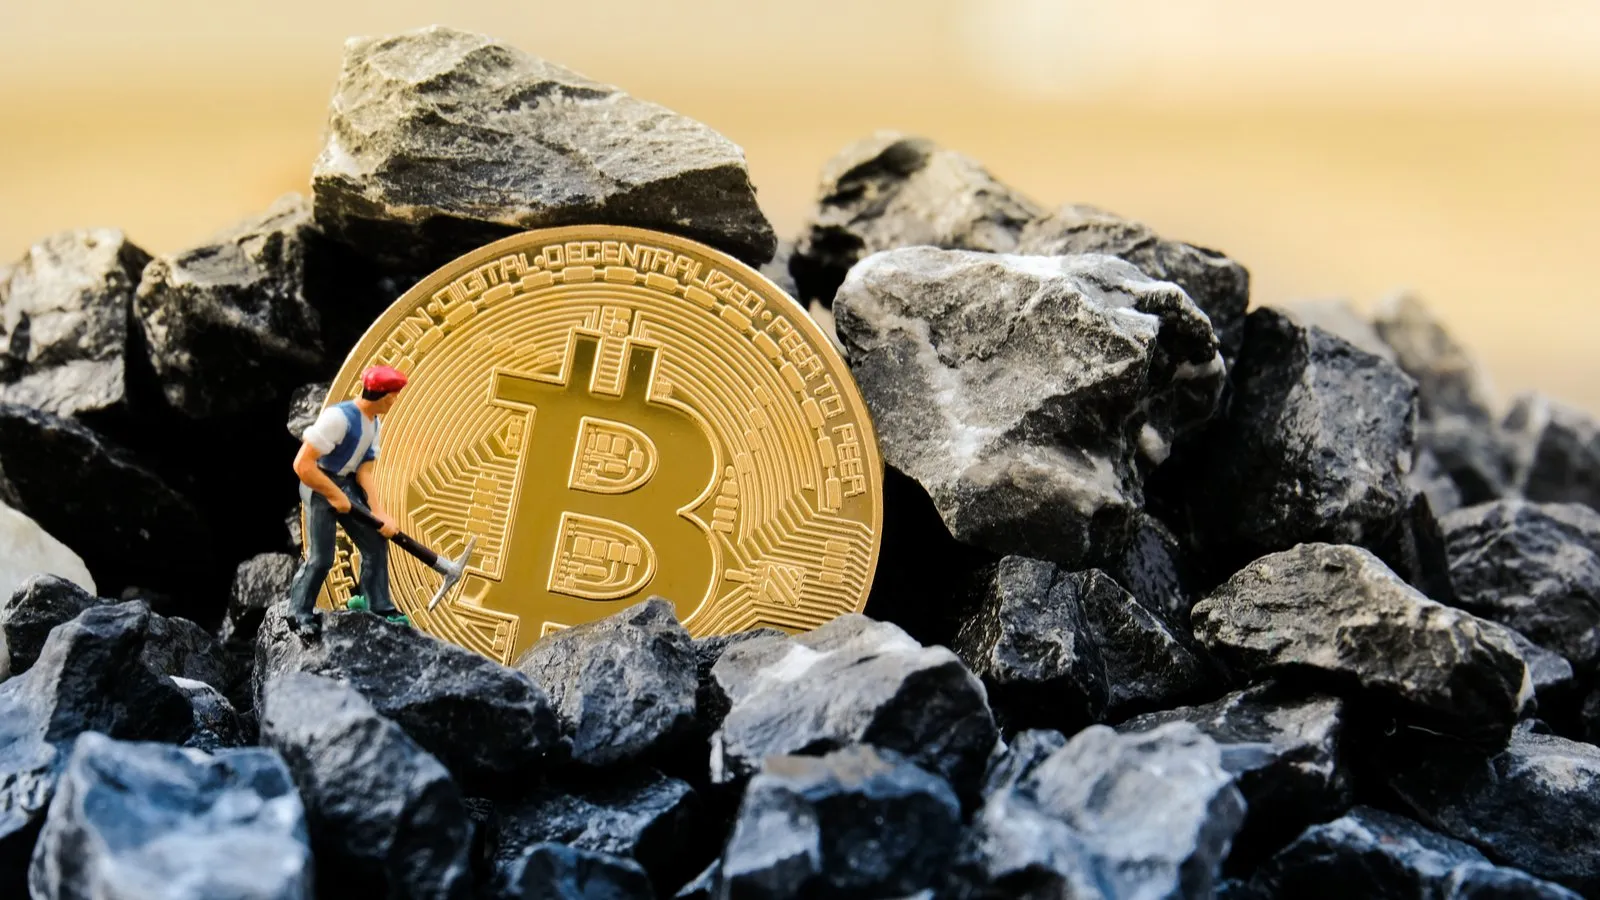 Core Scientific buys almost 18,000 Bitcoin miners. Image: Shutterstock